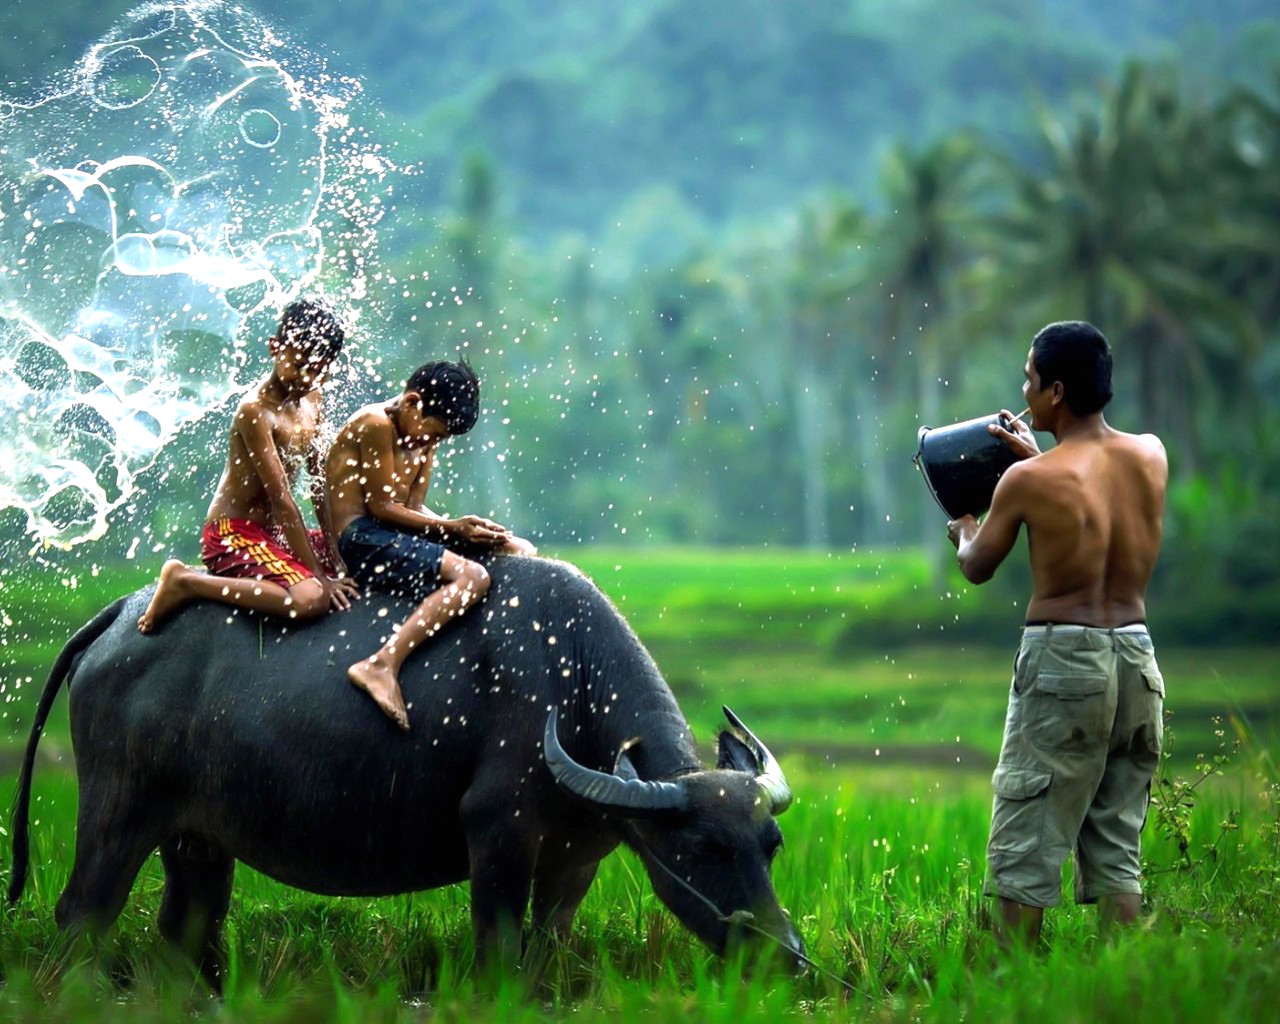 Indon kids on nature 0ez, PICT0105 @iMGSRC.RU